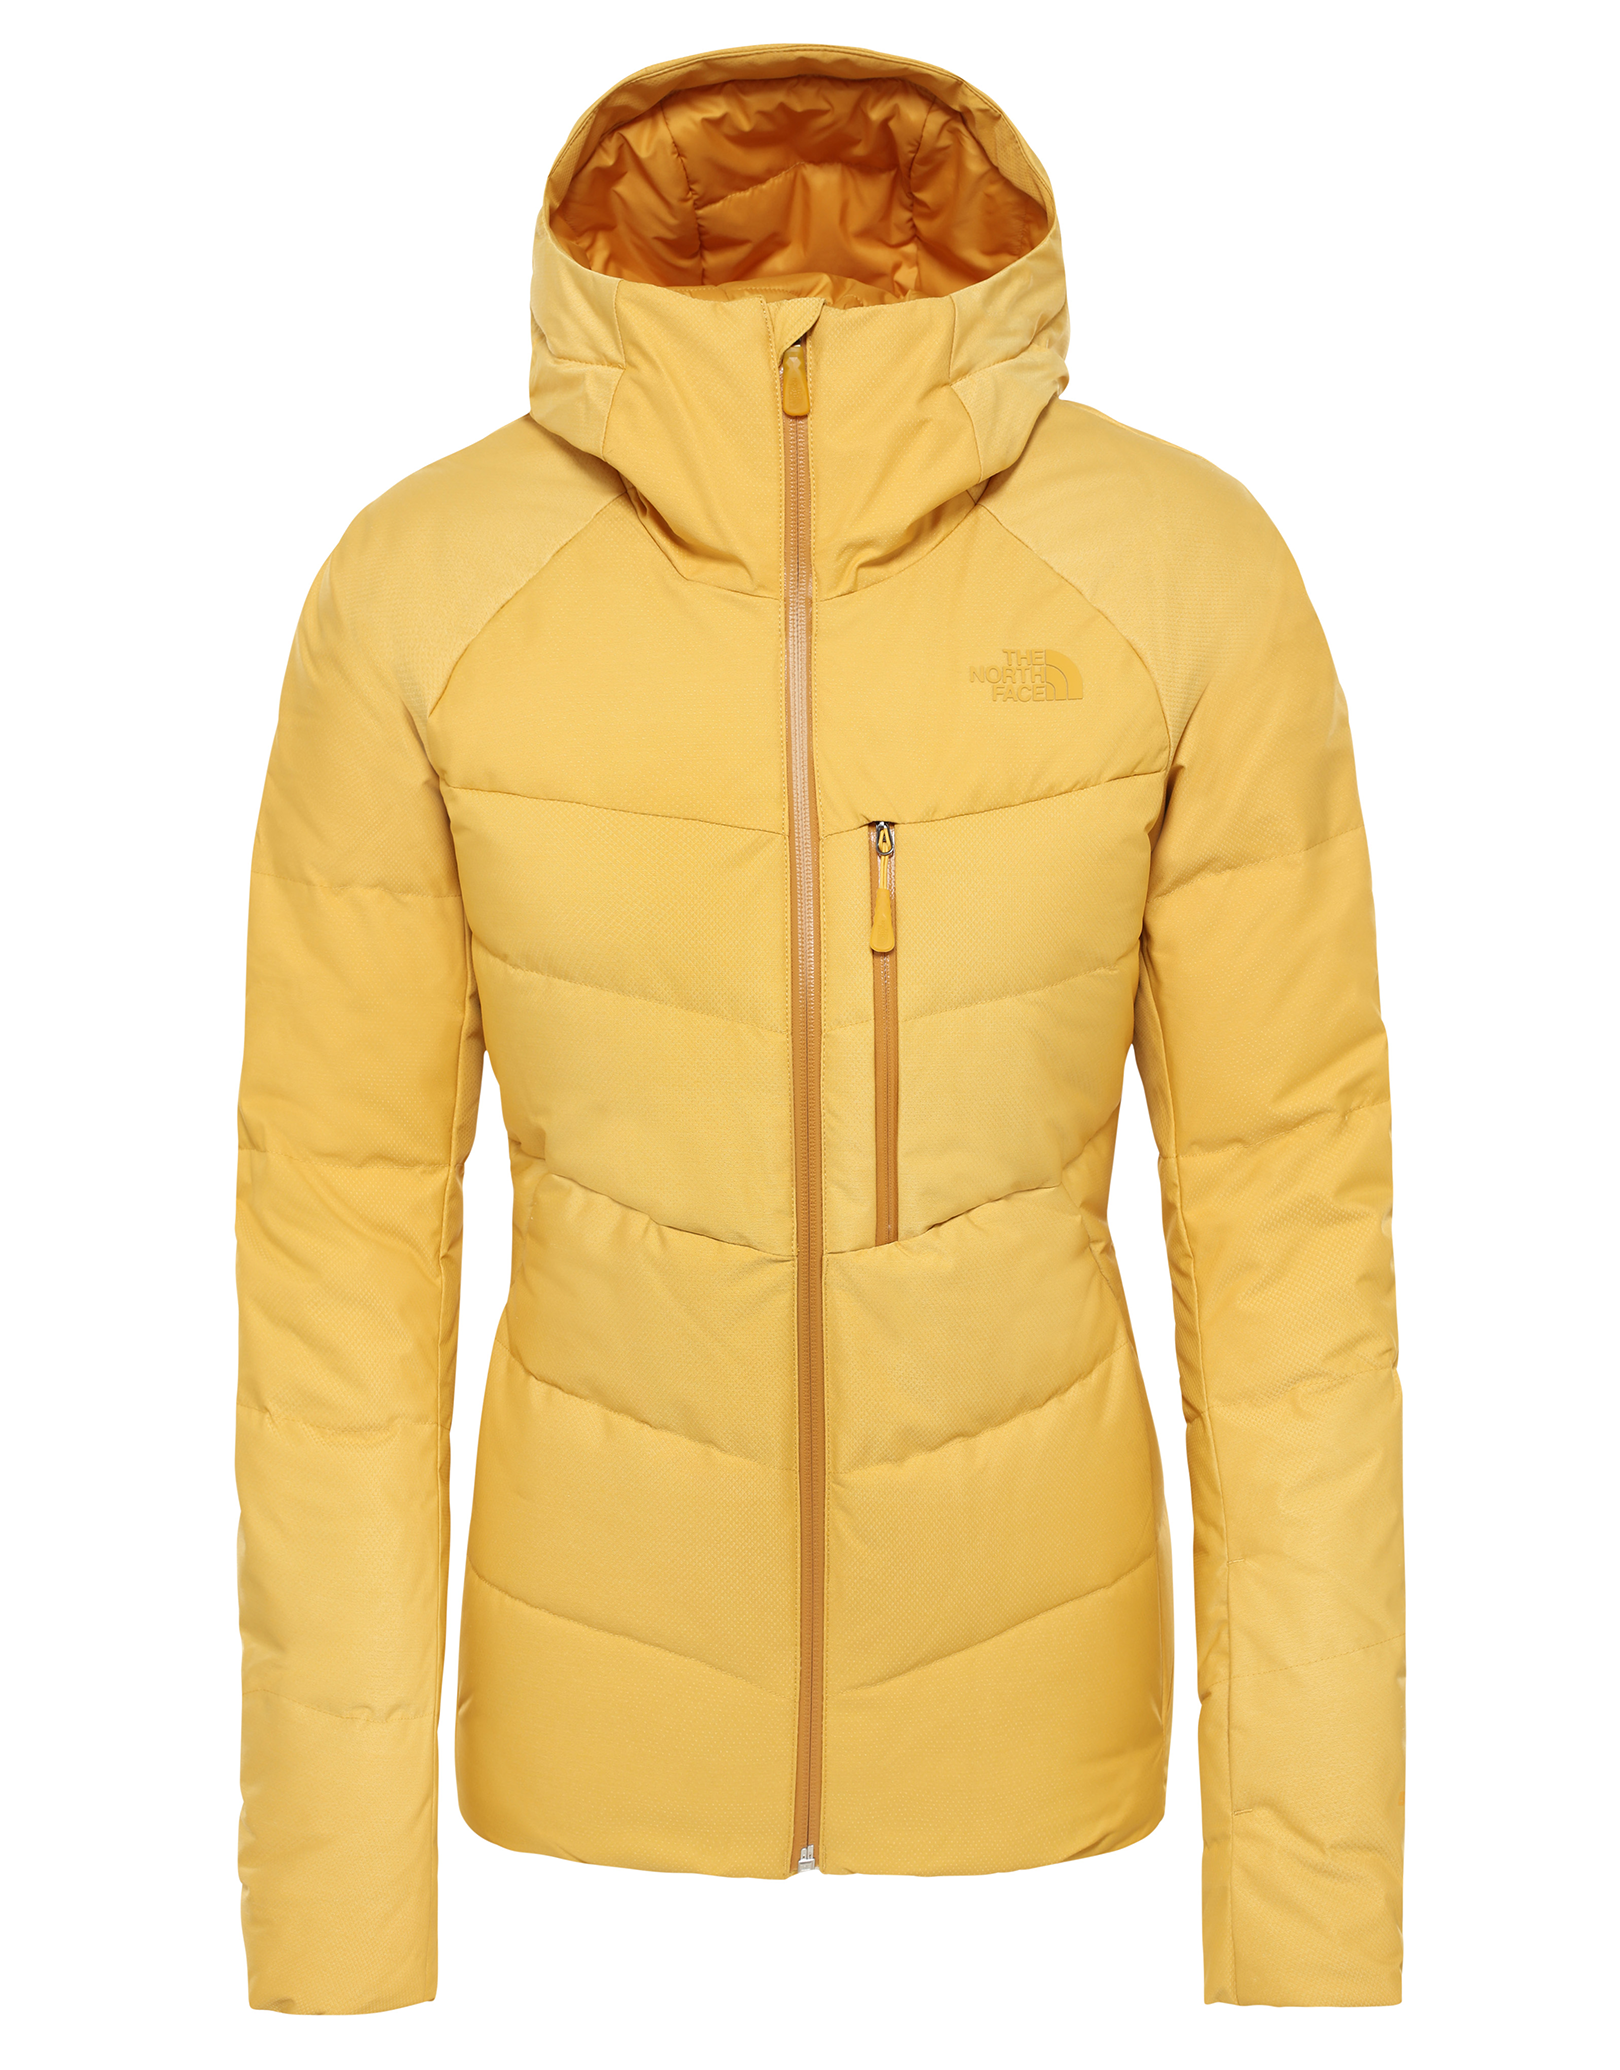 the north face ski jacket sale